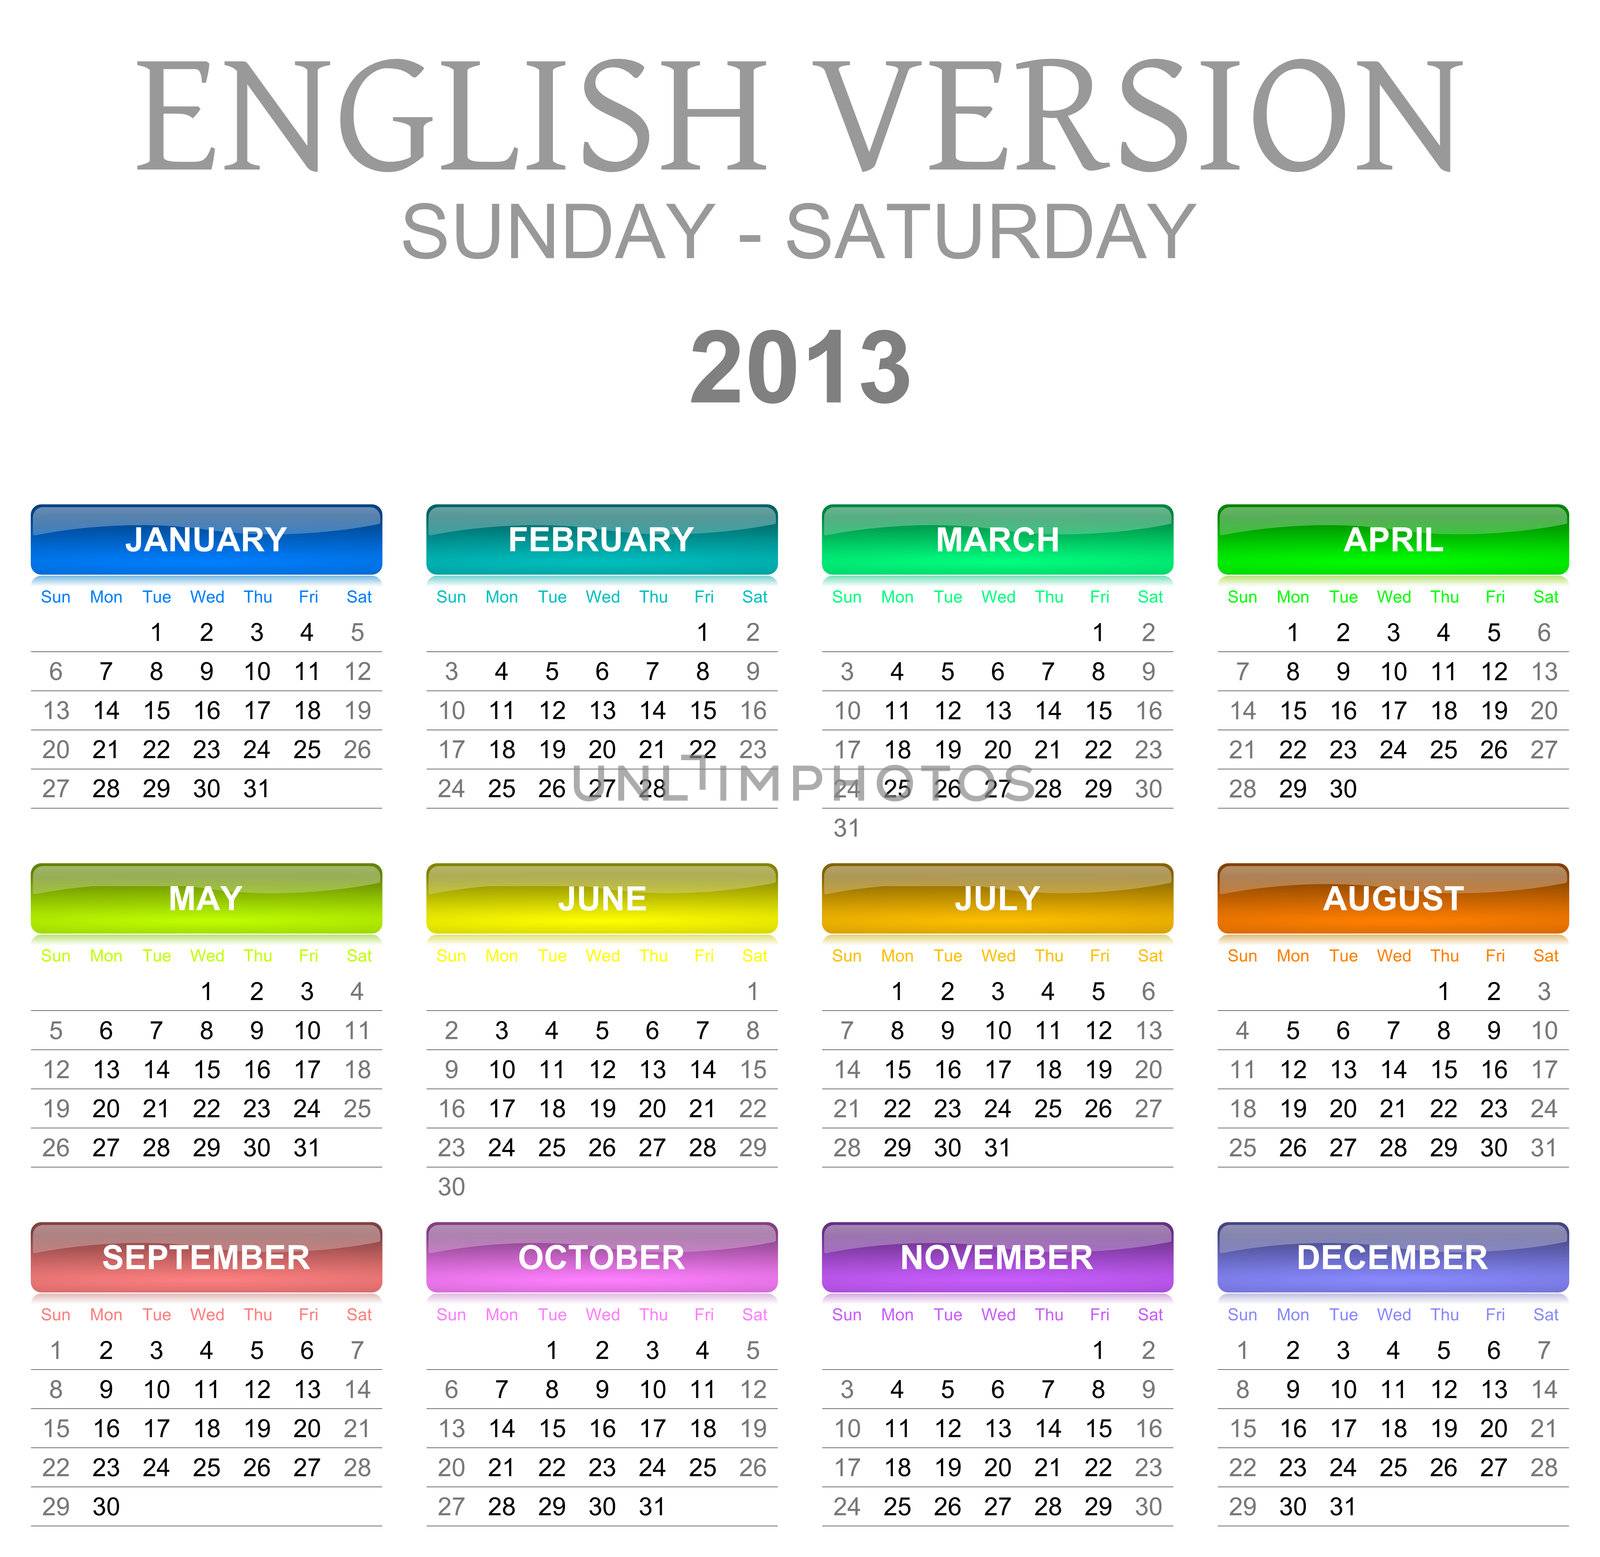 Colorful sunday to saturday 2013 calendar english version illustration